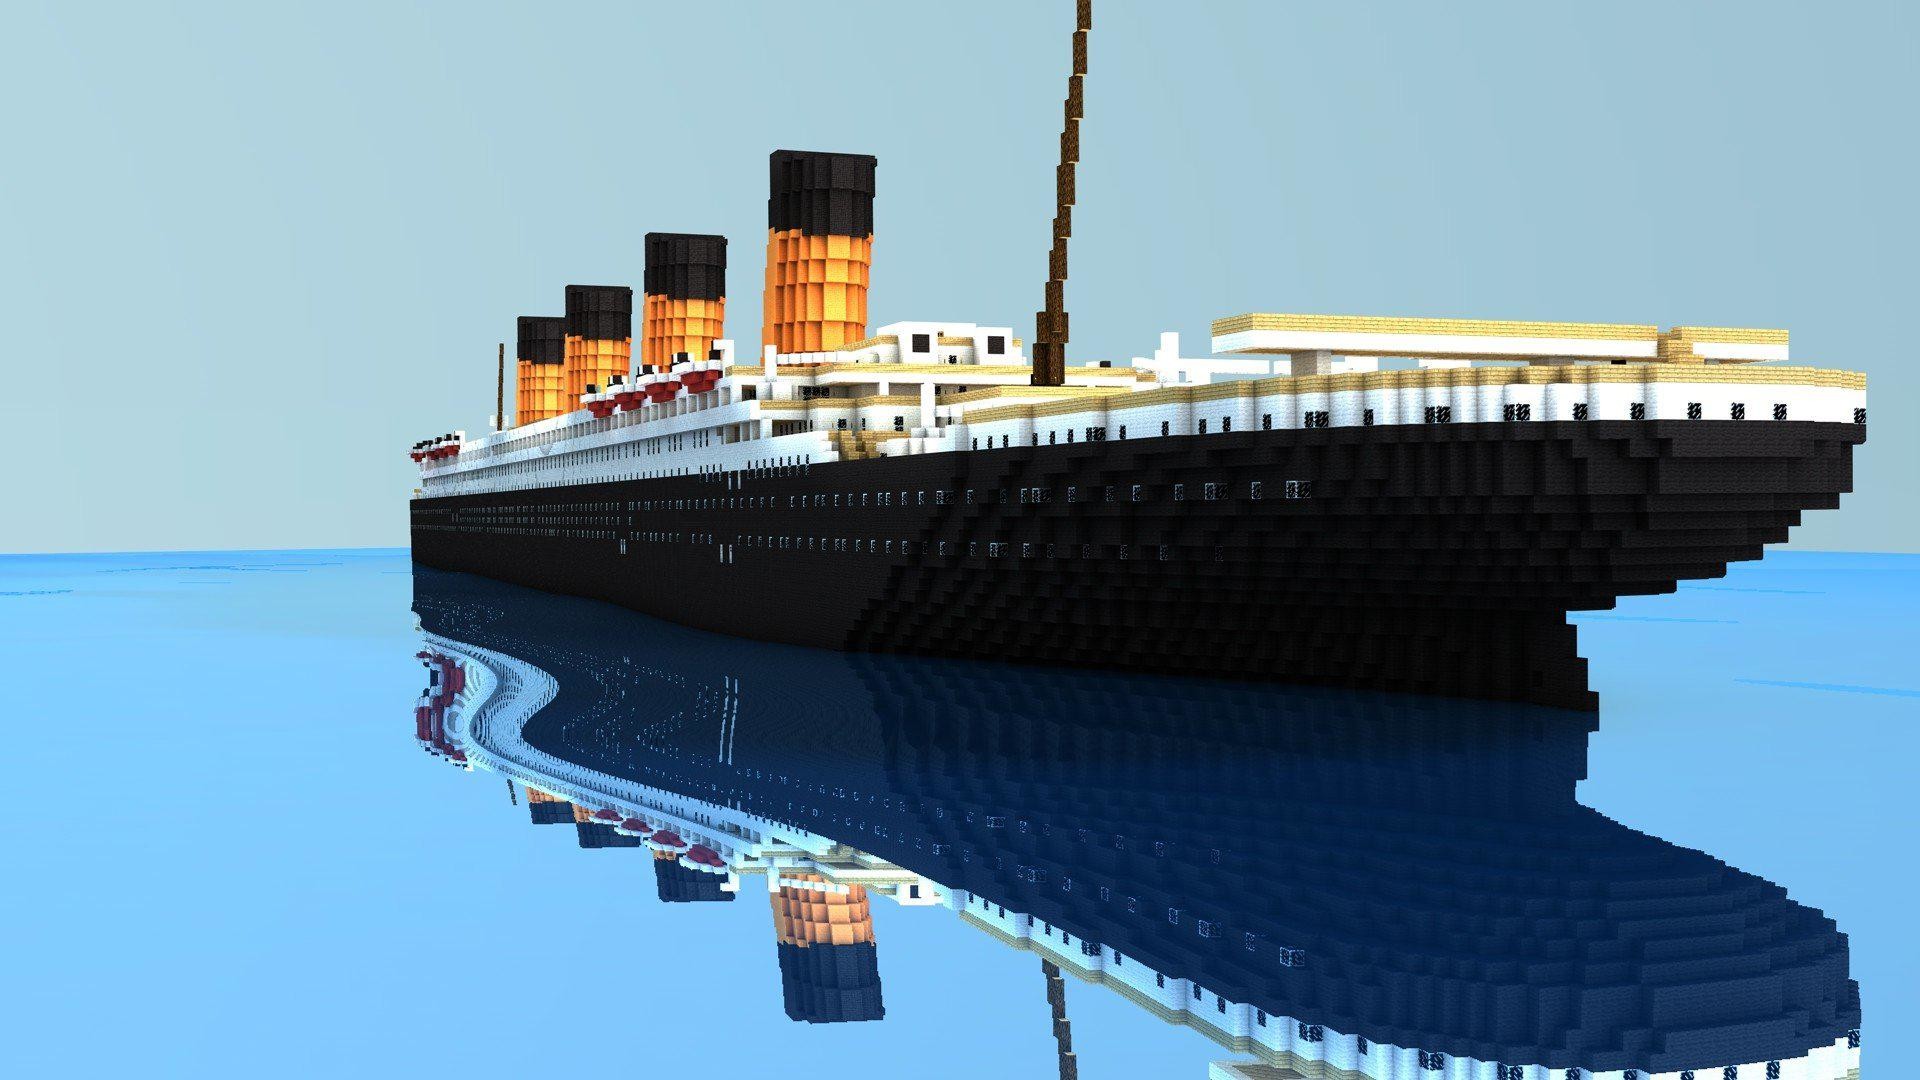 1920x1080 Ocean Old Titanic Minecraft Realistic, Lb Photo Realism, Minecraft Lb  Photo, Photo Realism Minecraft, Games, Wallpaper Of Minecraft, Minecraft Hd  Wallpaper, ...